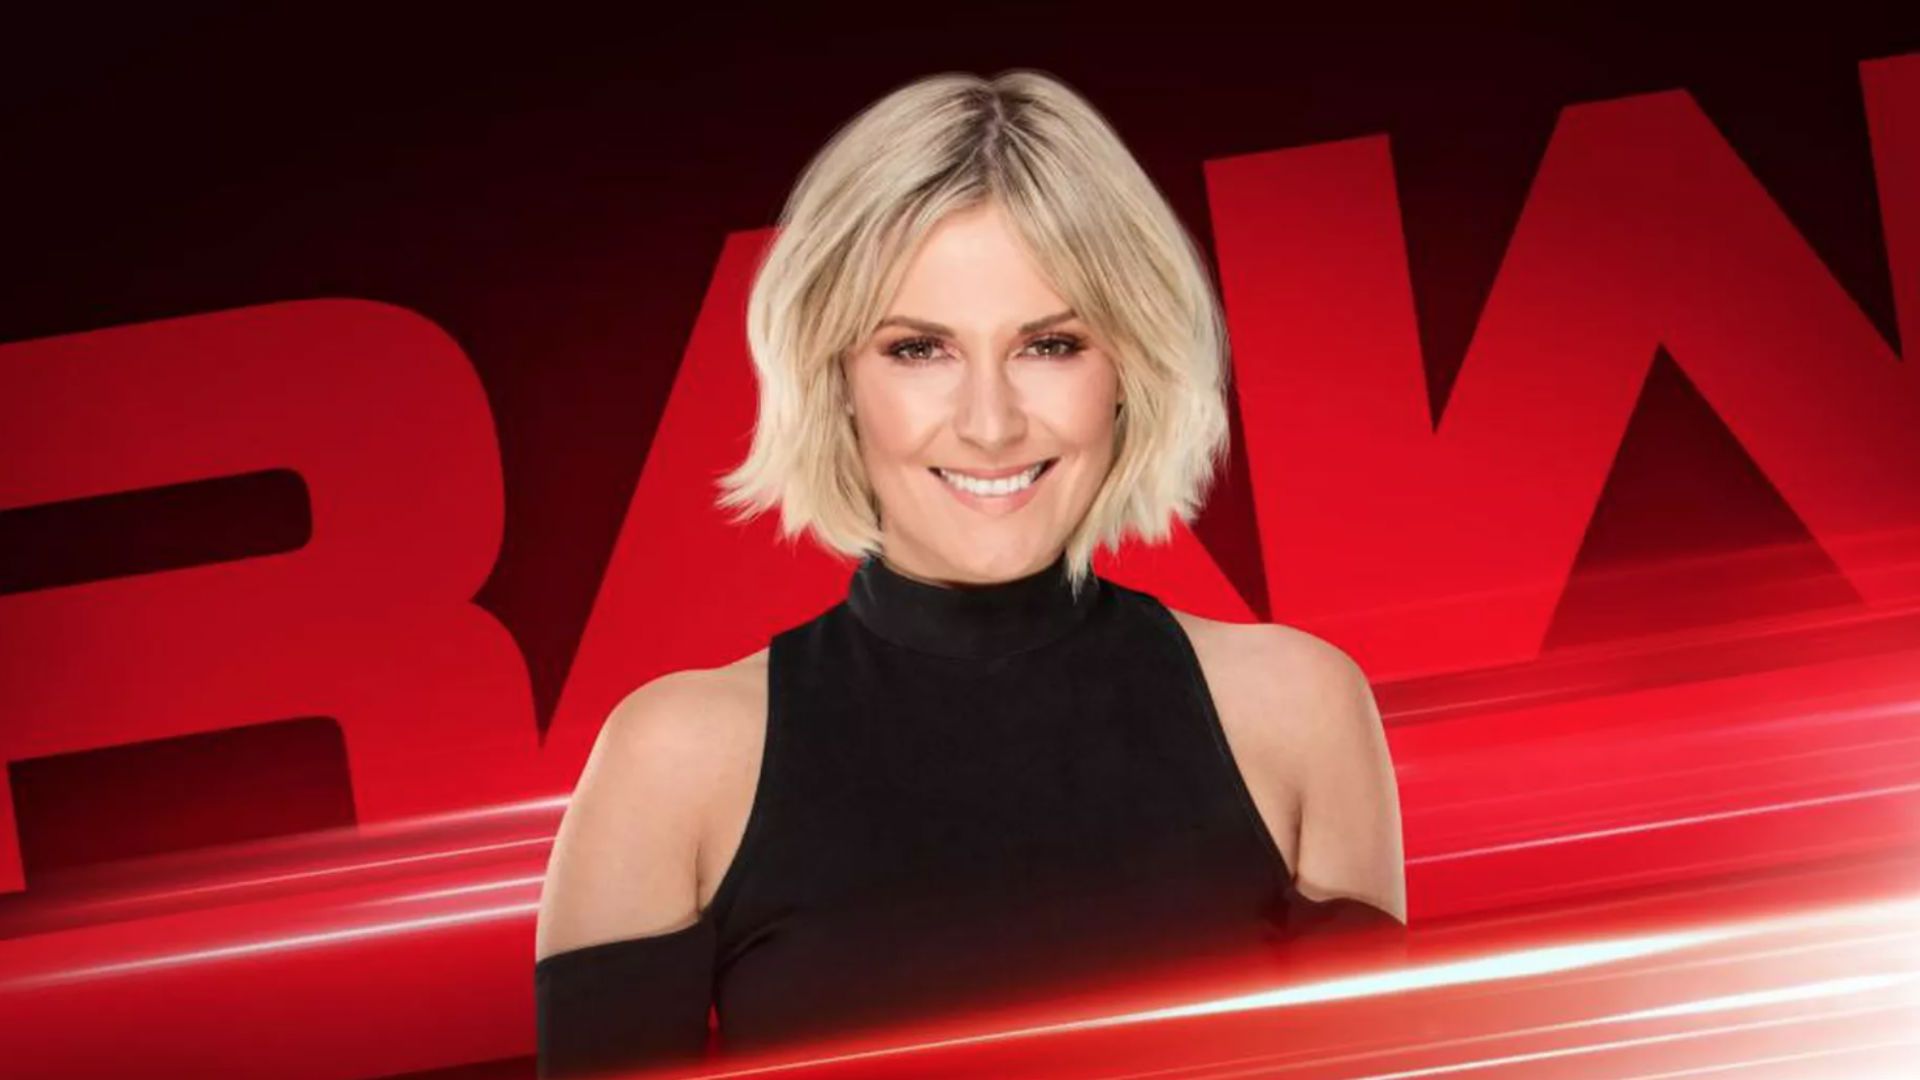 Renee Young replaces Jonathan Coachman on WWE 'RAW' broadcast team